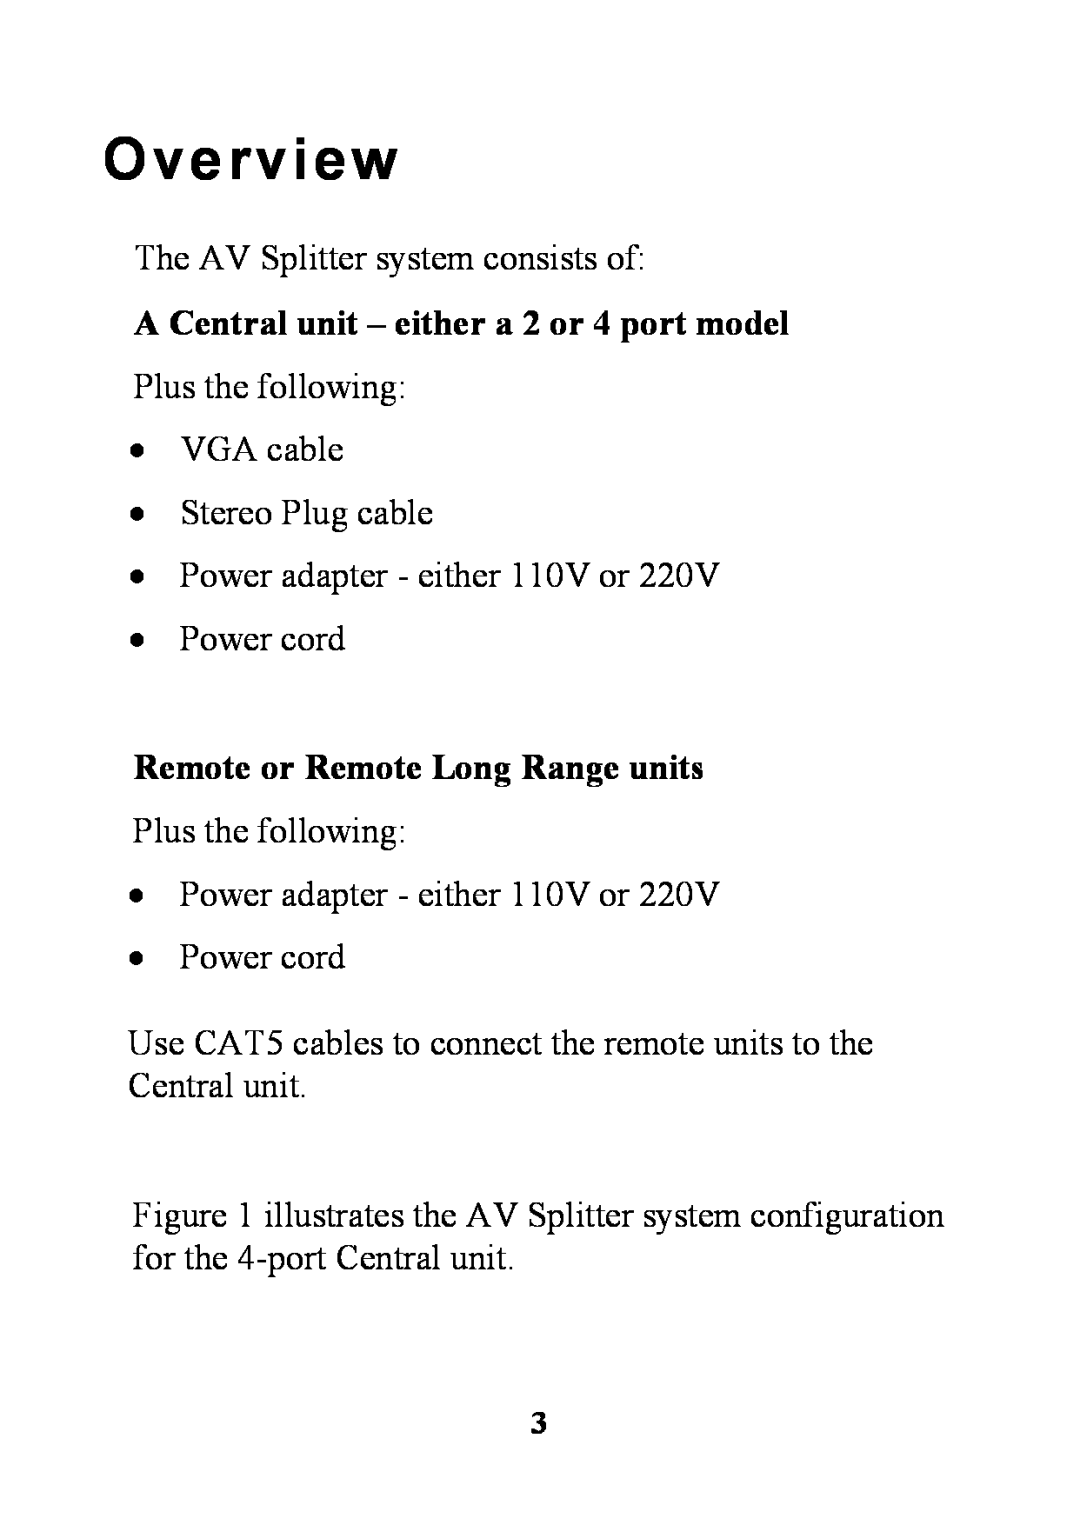 Minicom Advanced Systems 5UM40066 - V1 8/01 manual Overview, A Central unit - either a 2 or 4 port model 